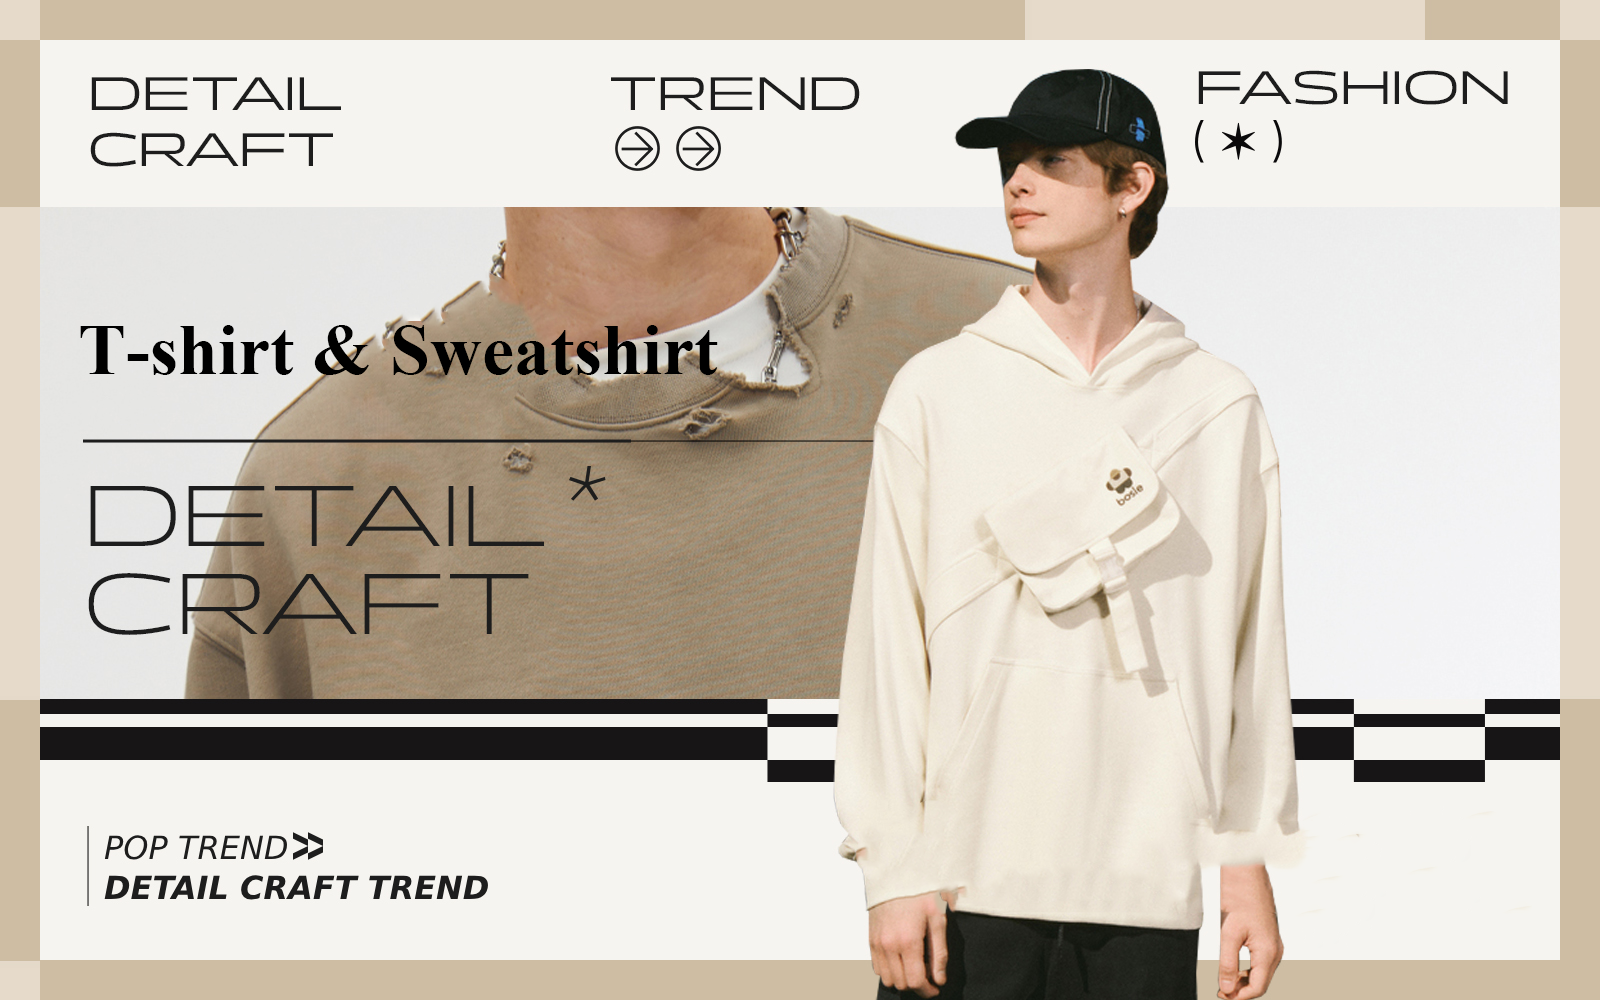 The Detail & Craft Trend for Men's T-shirt & Sweatshirt